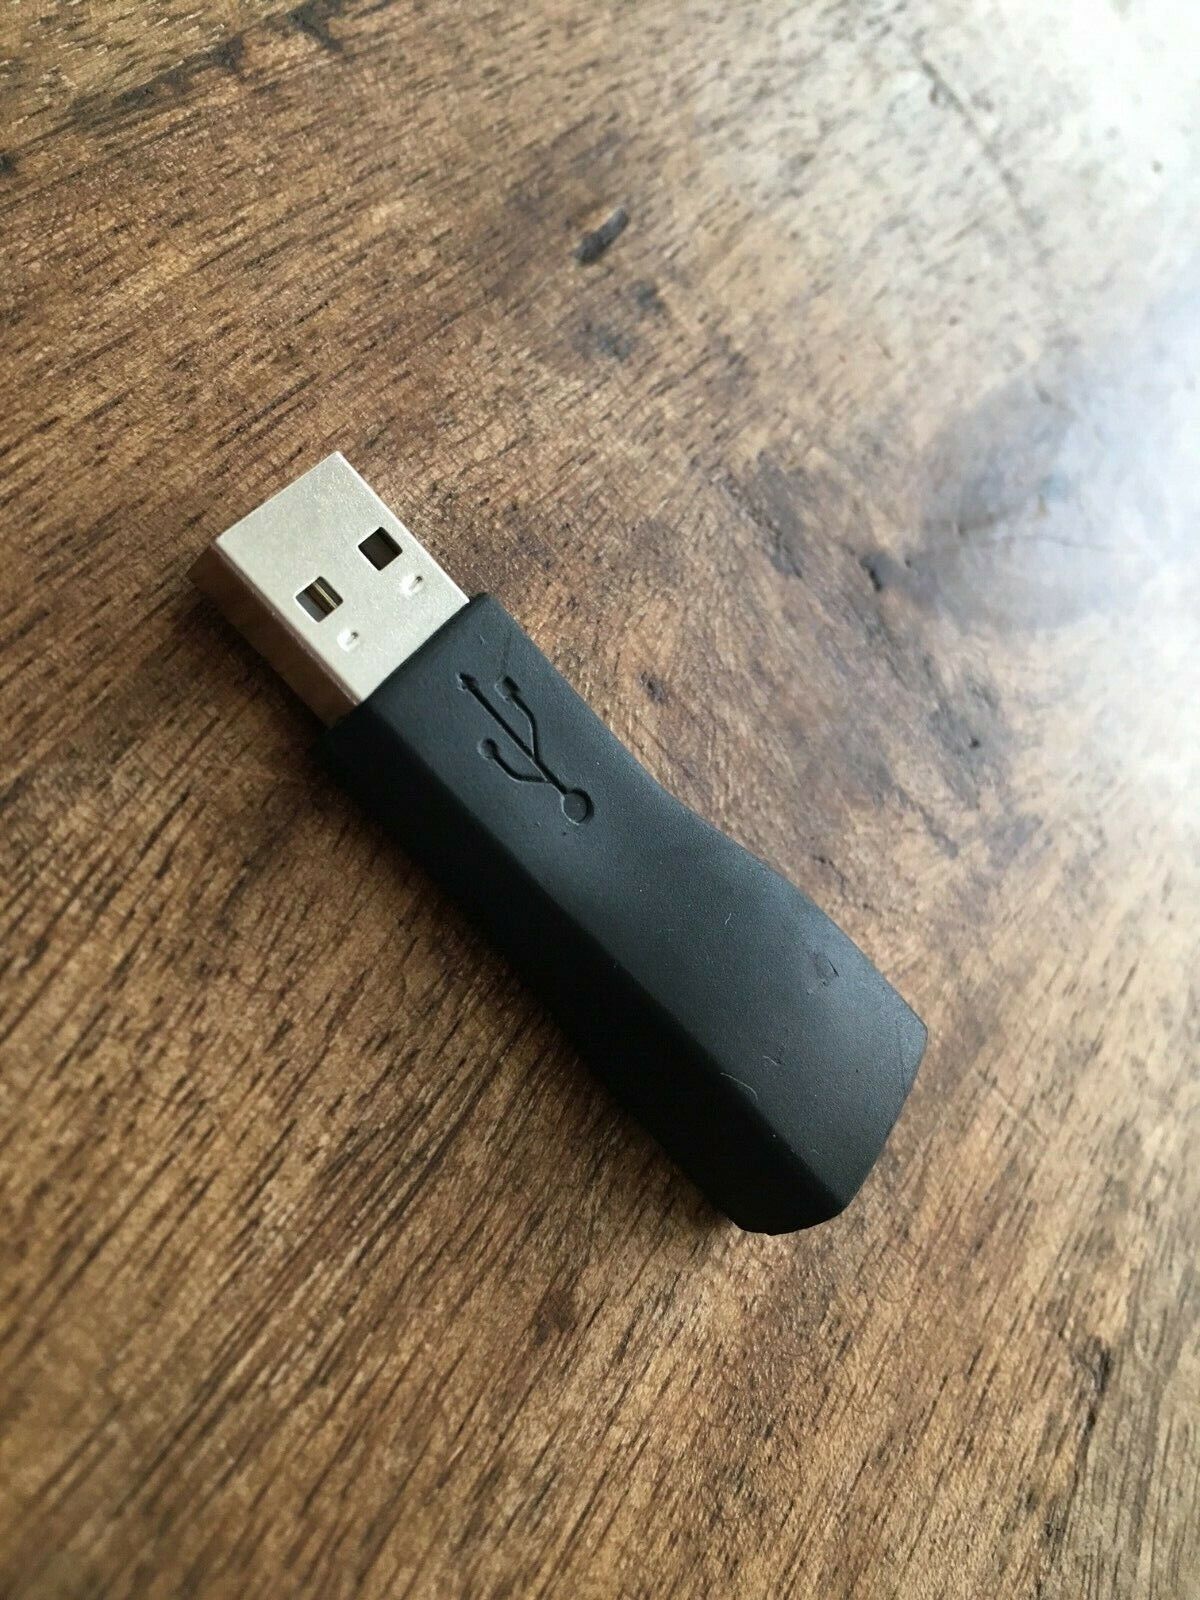 Genuine Logitech USB Dongle Extender for Unifying Receiver